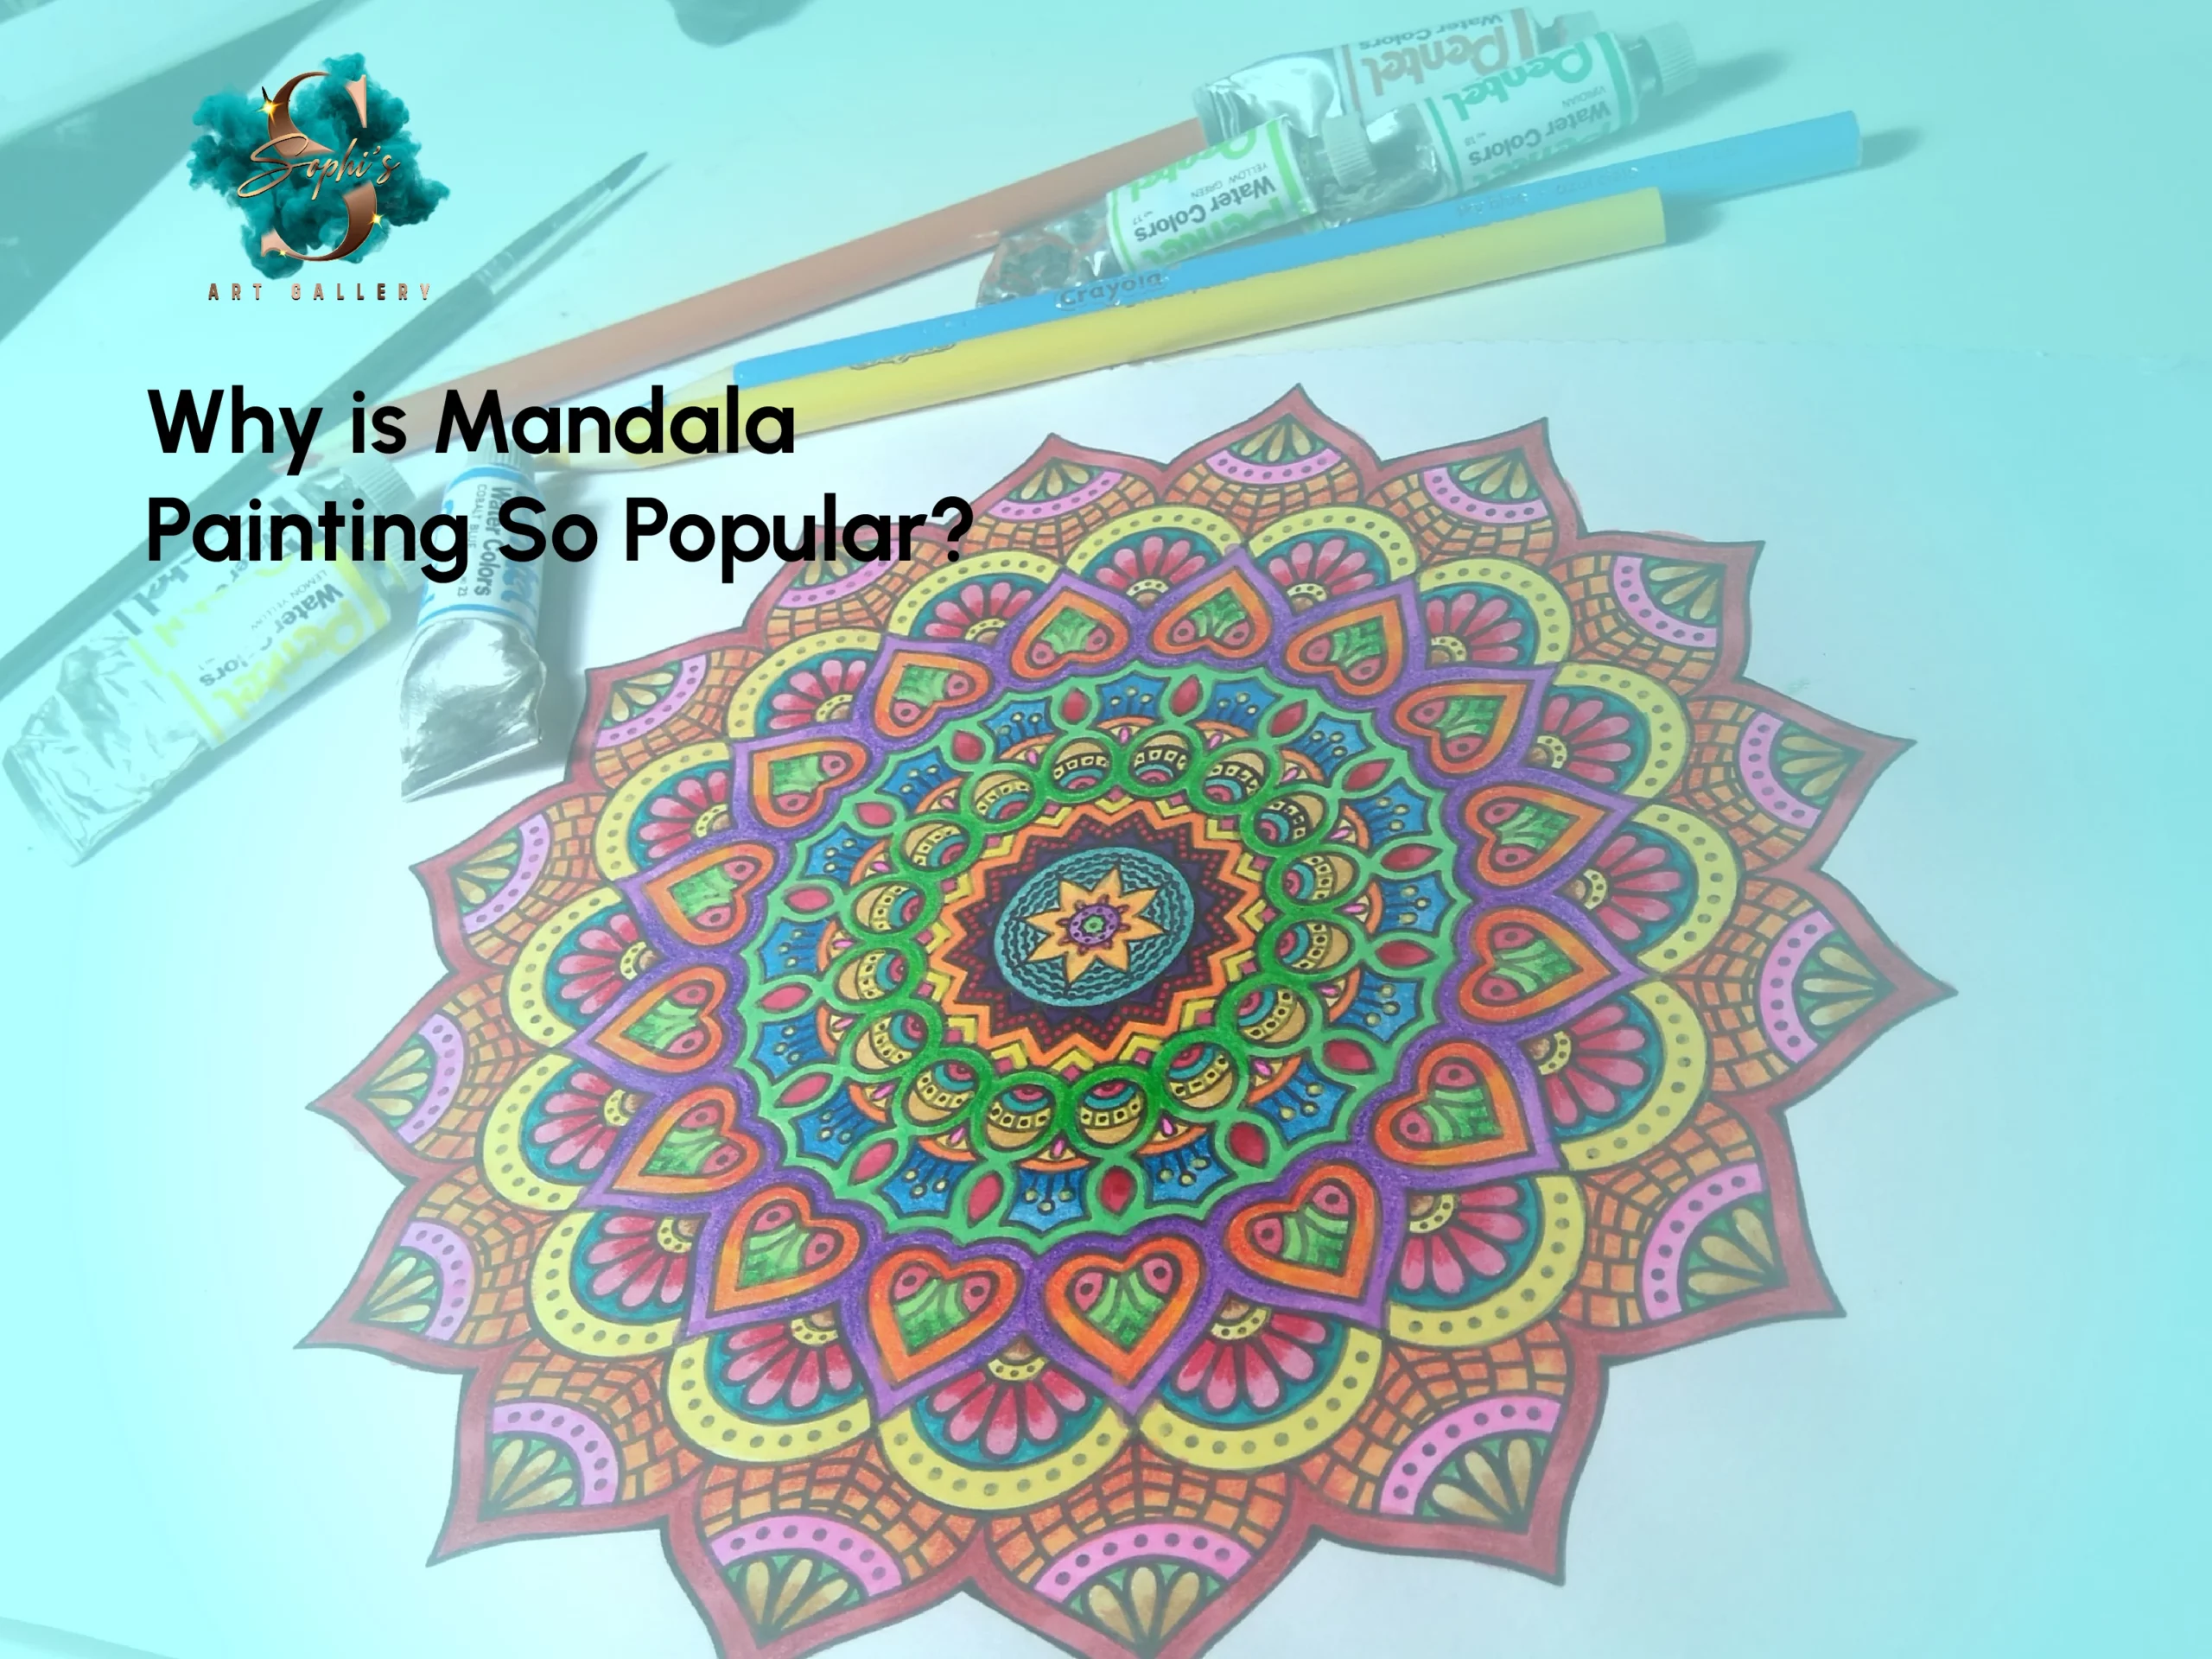 Why is Mandala Painting So Popular?